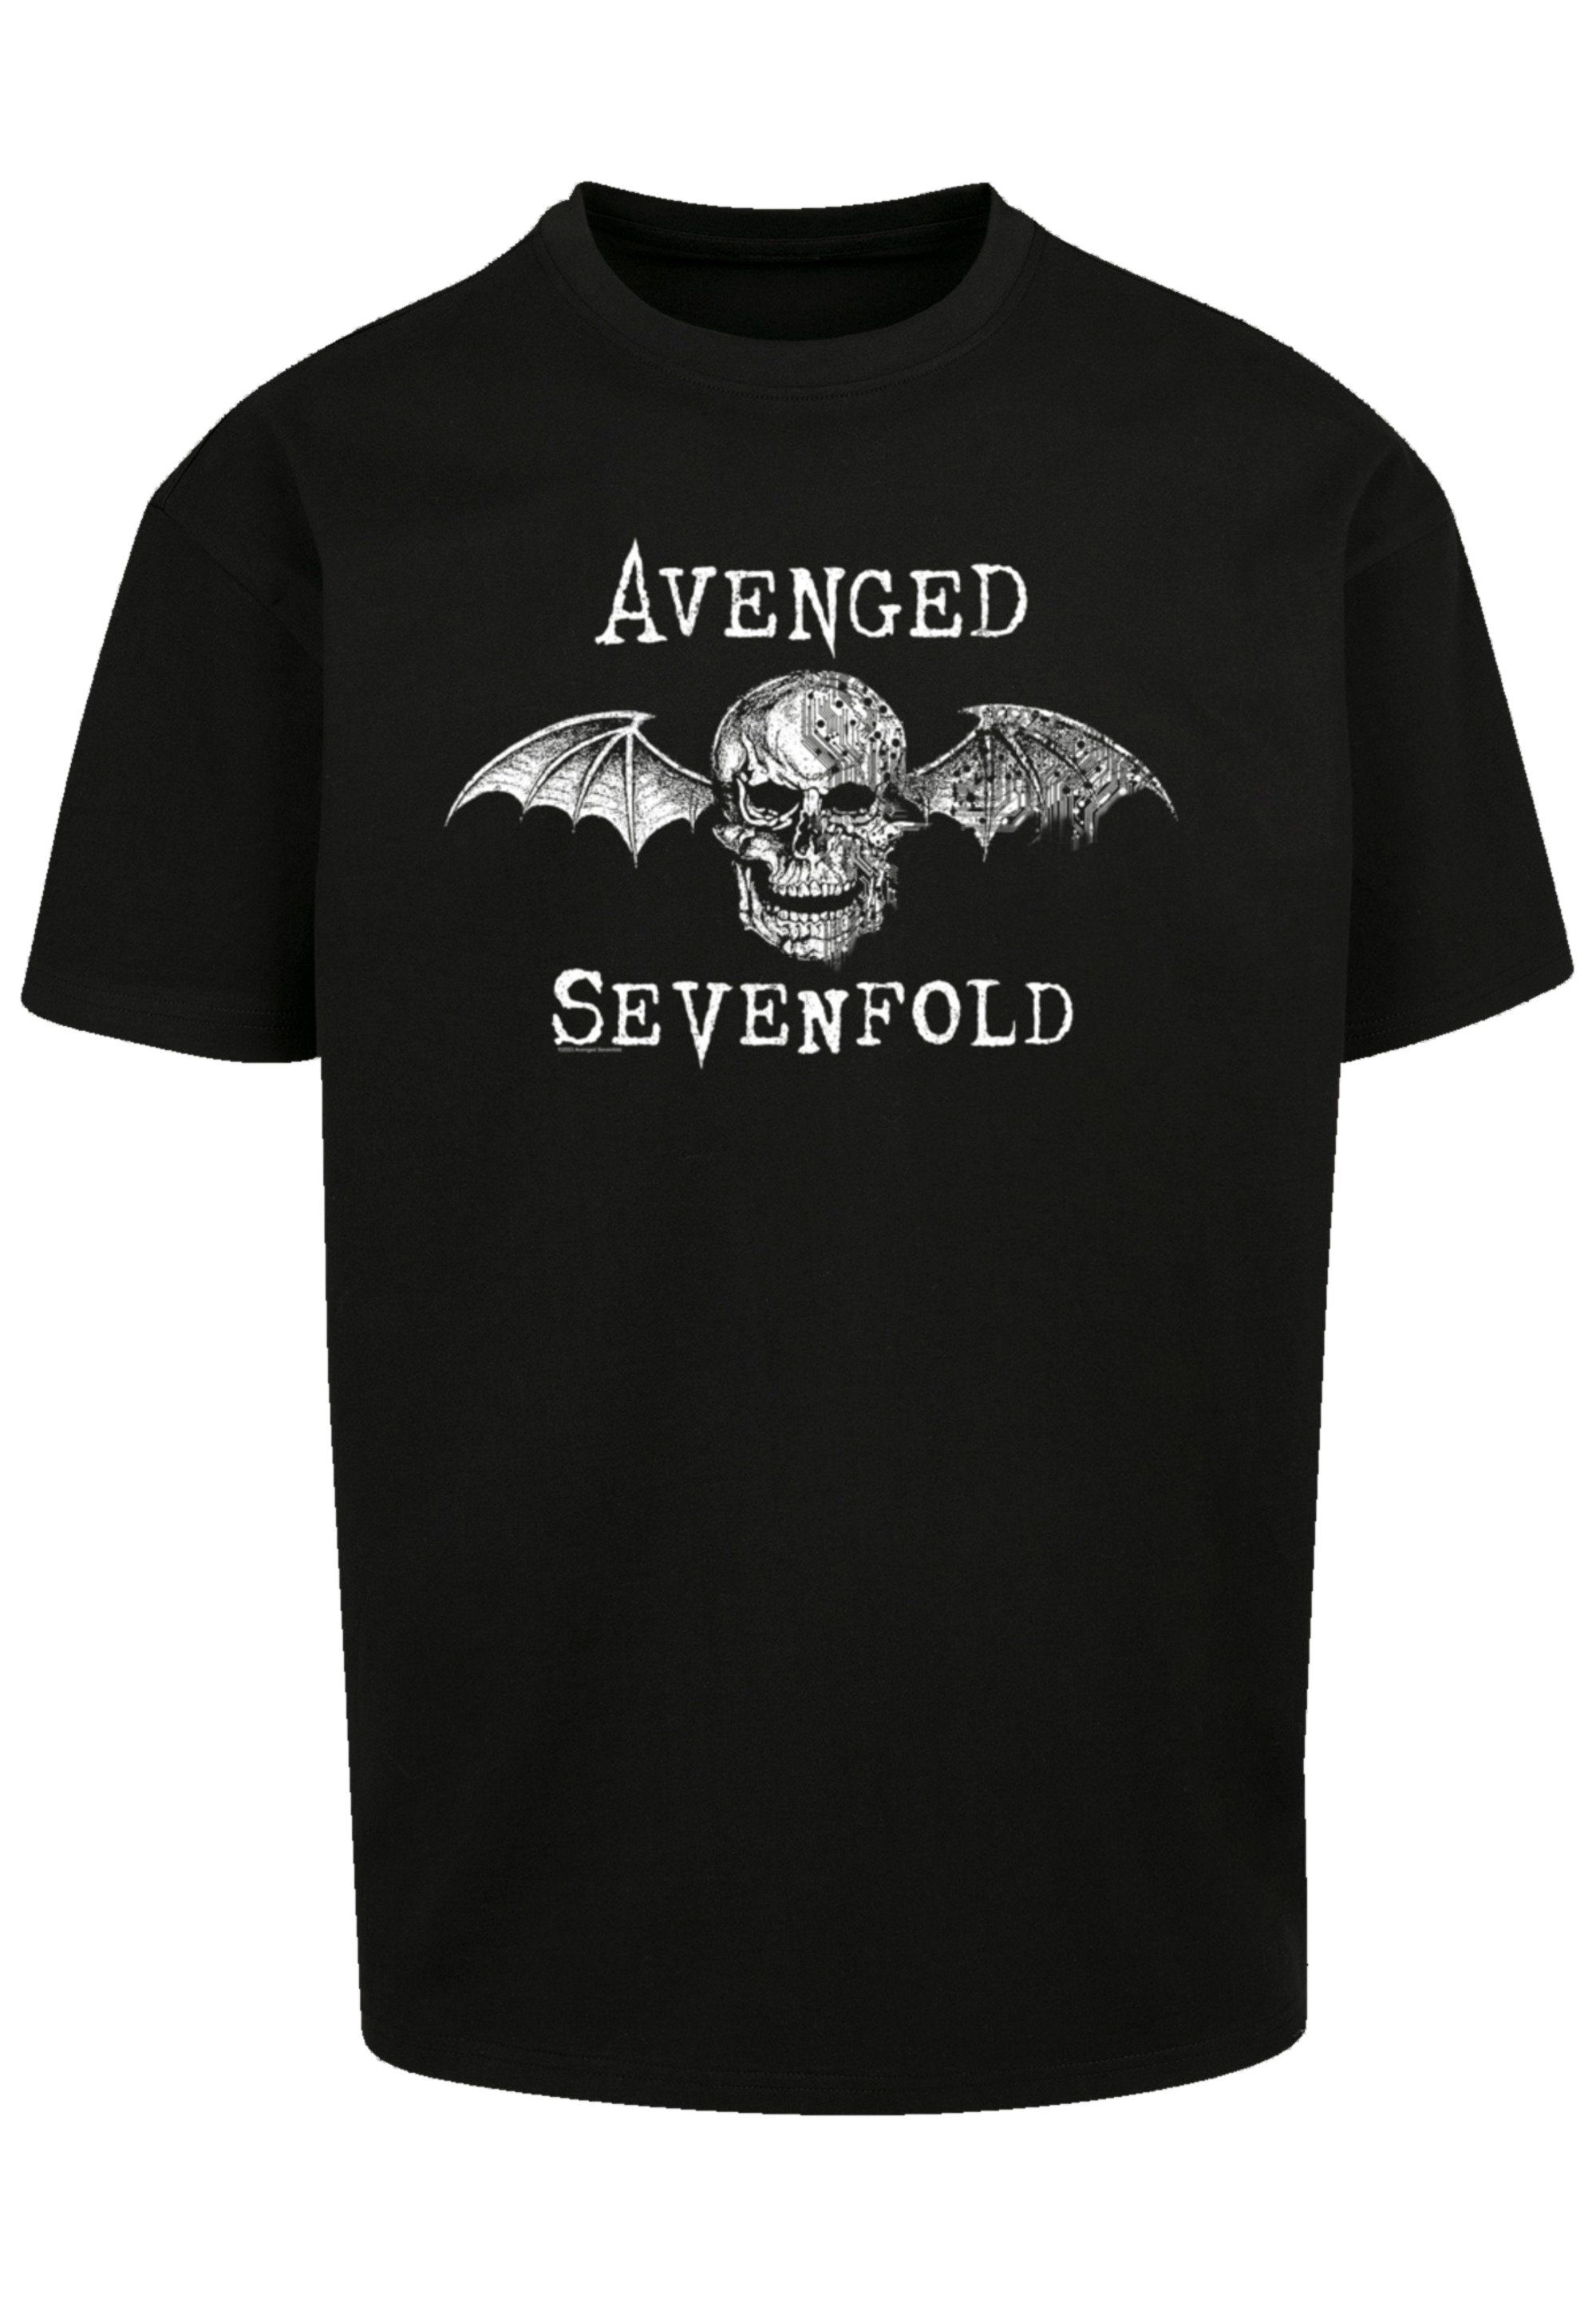 Qualität, F4NT4STIC Band, T-Shirt Cyborg schwarz Band Rock Rock-Musik Premium Metal Avenged Bat Sevenfold